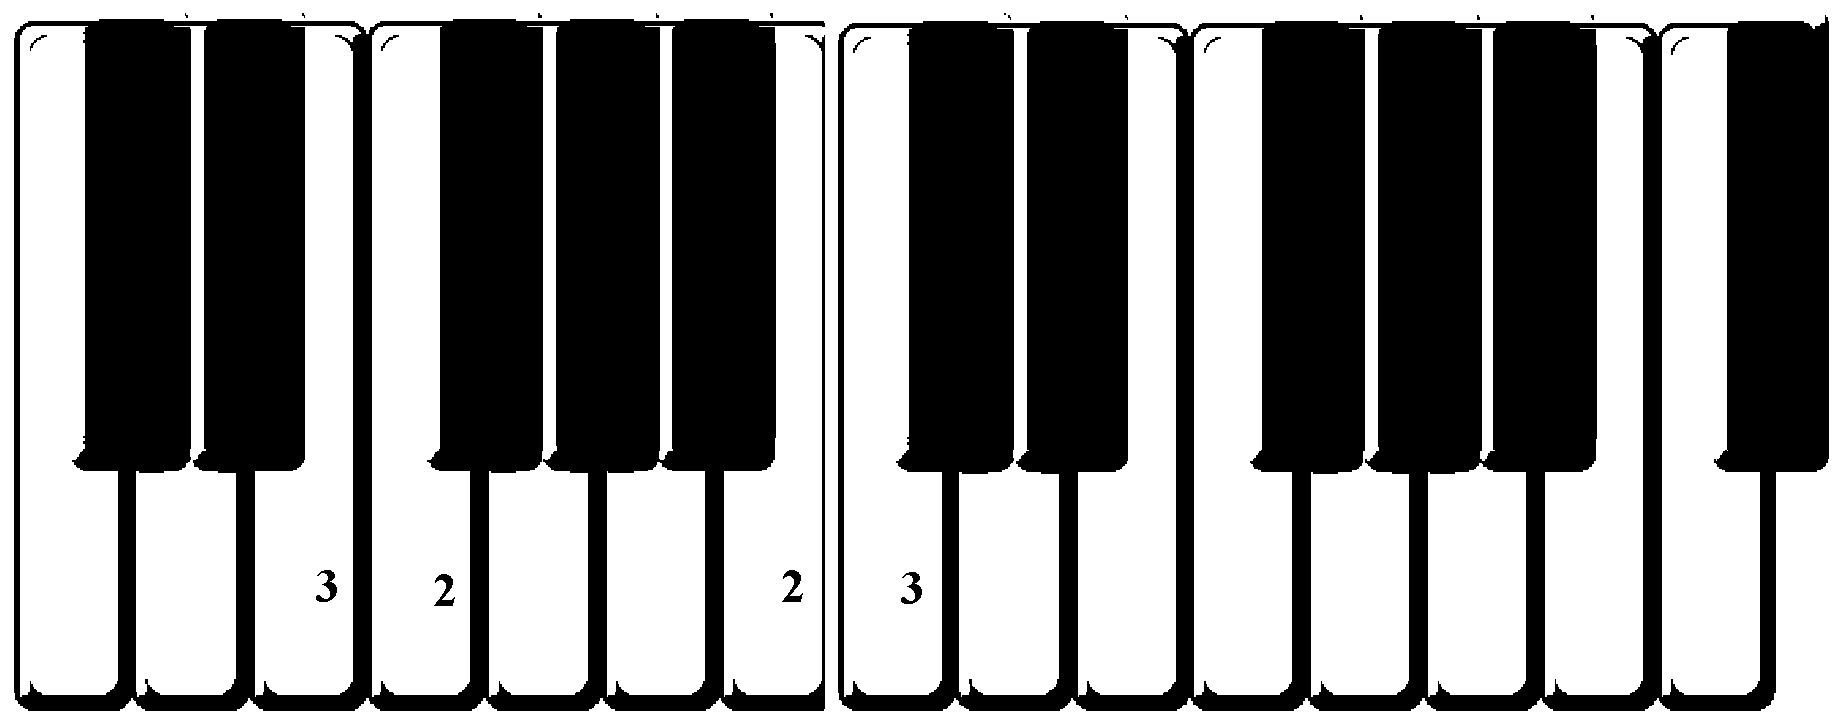 Клавиатура 2 октавы на а4